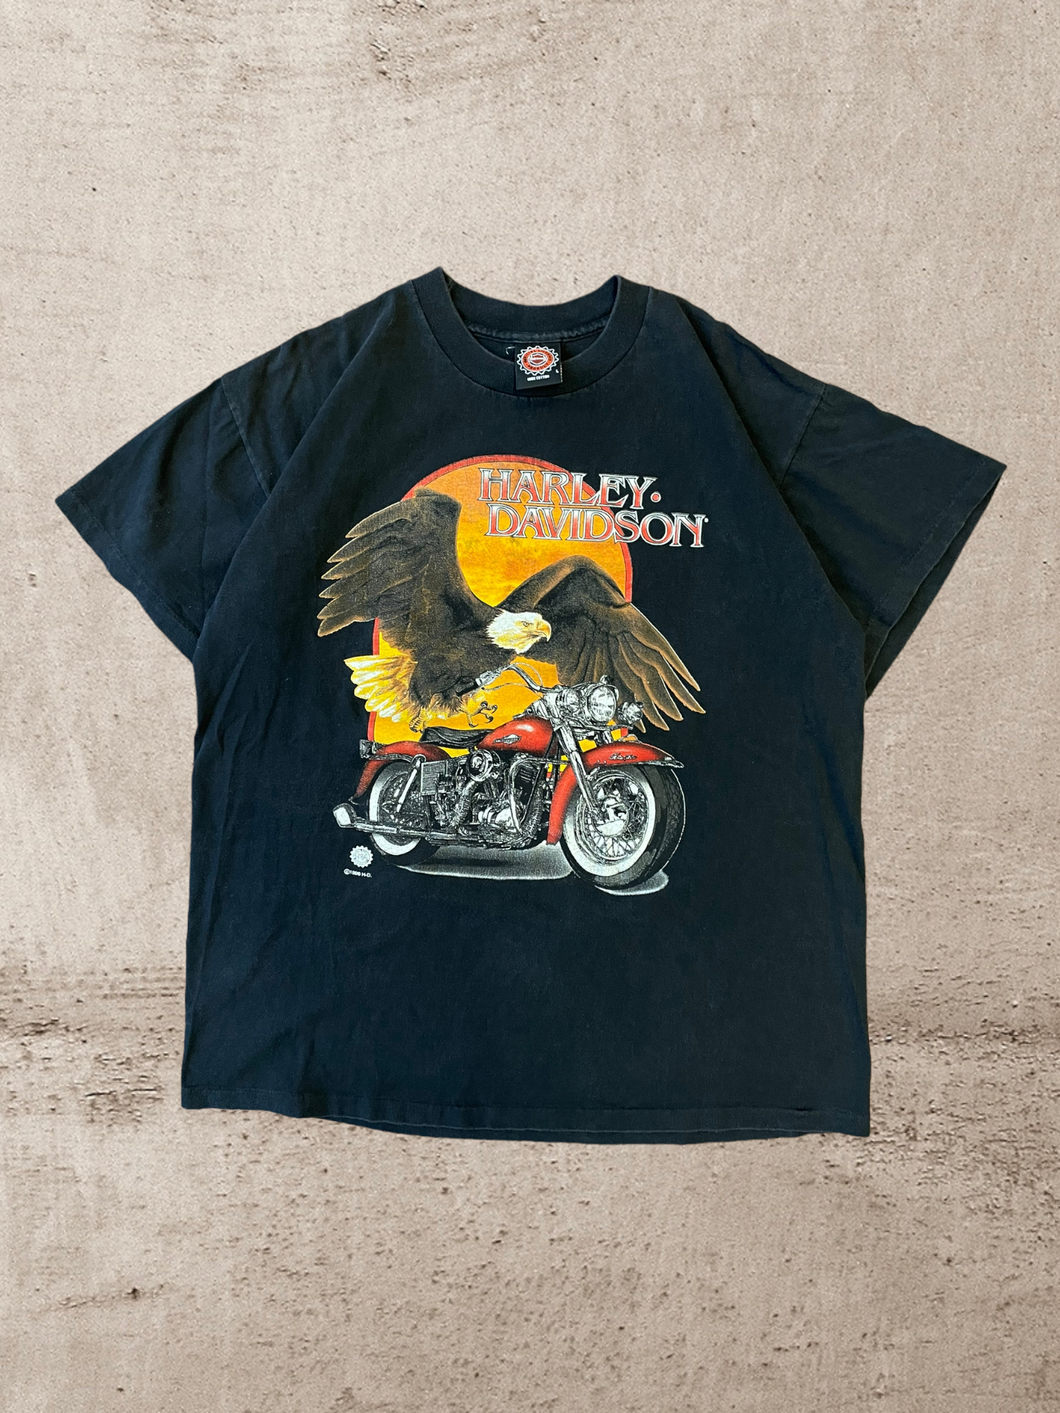 1996 Harley Davidson Graphic T-Shirt - Large